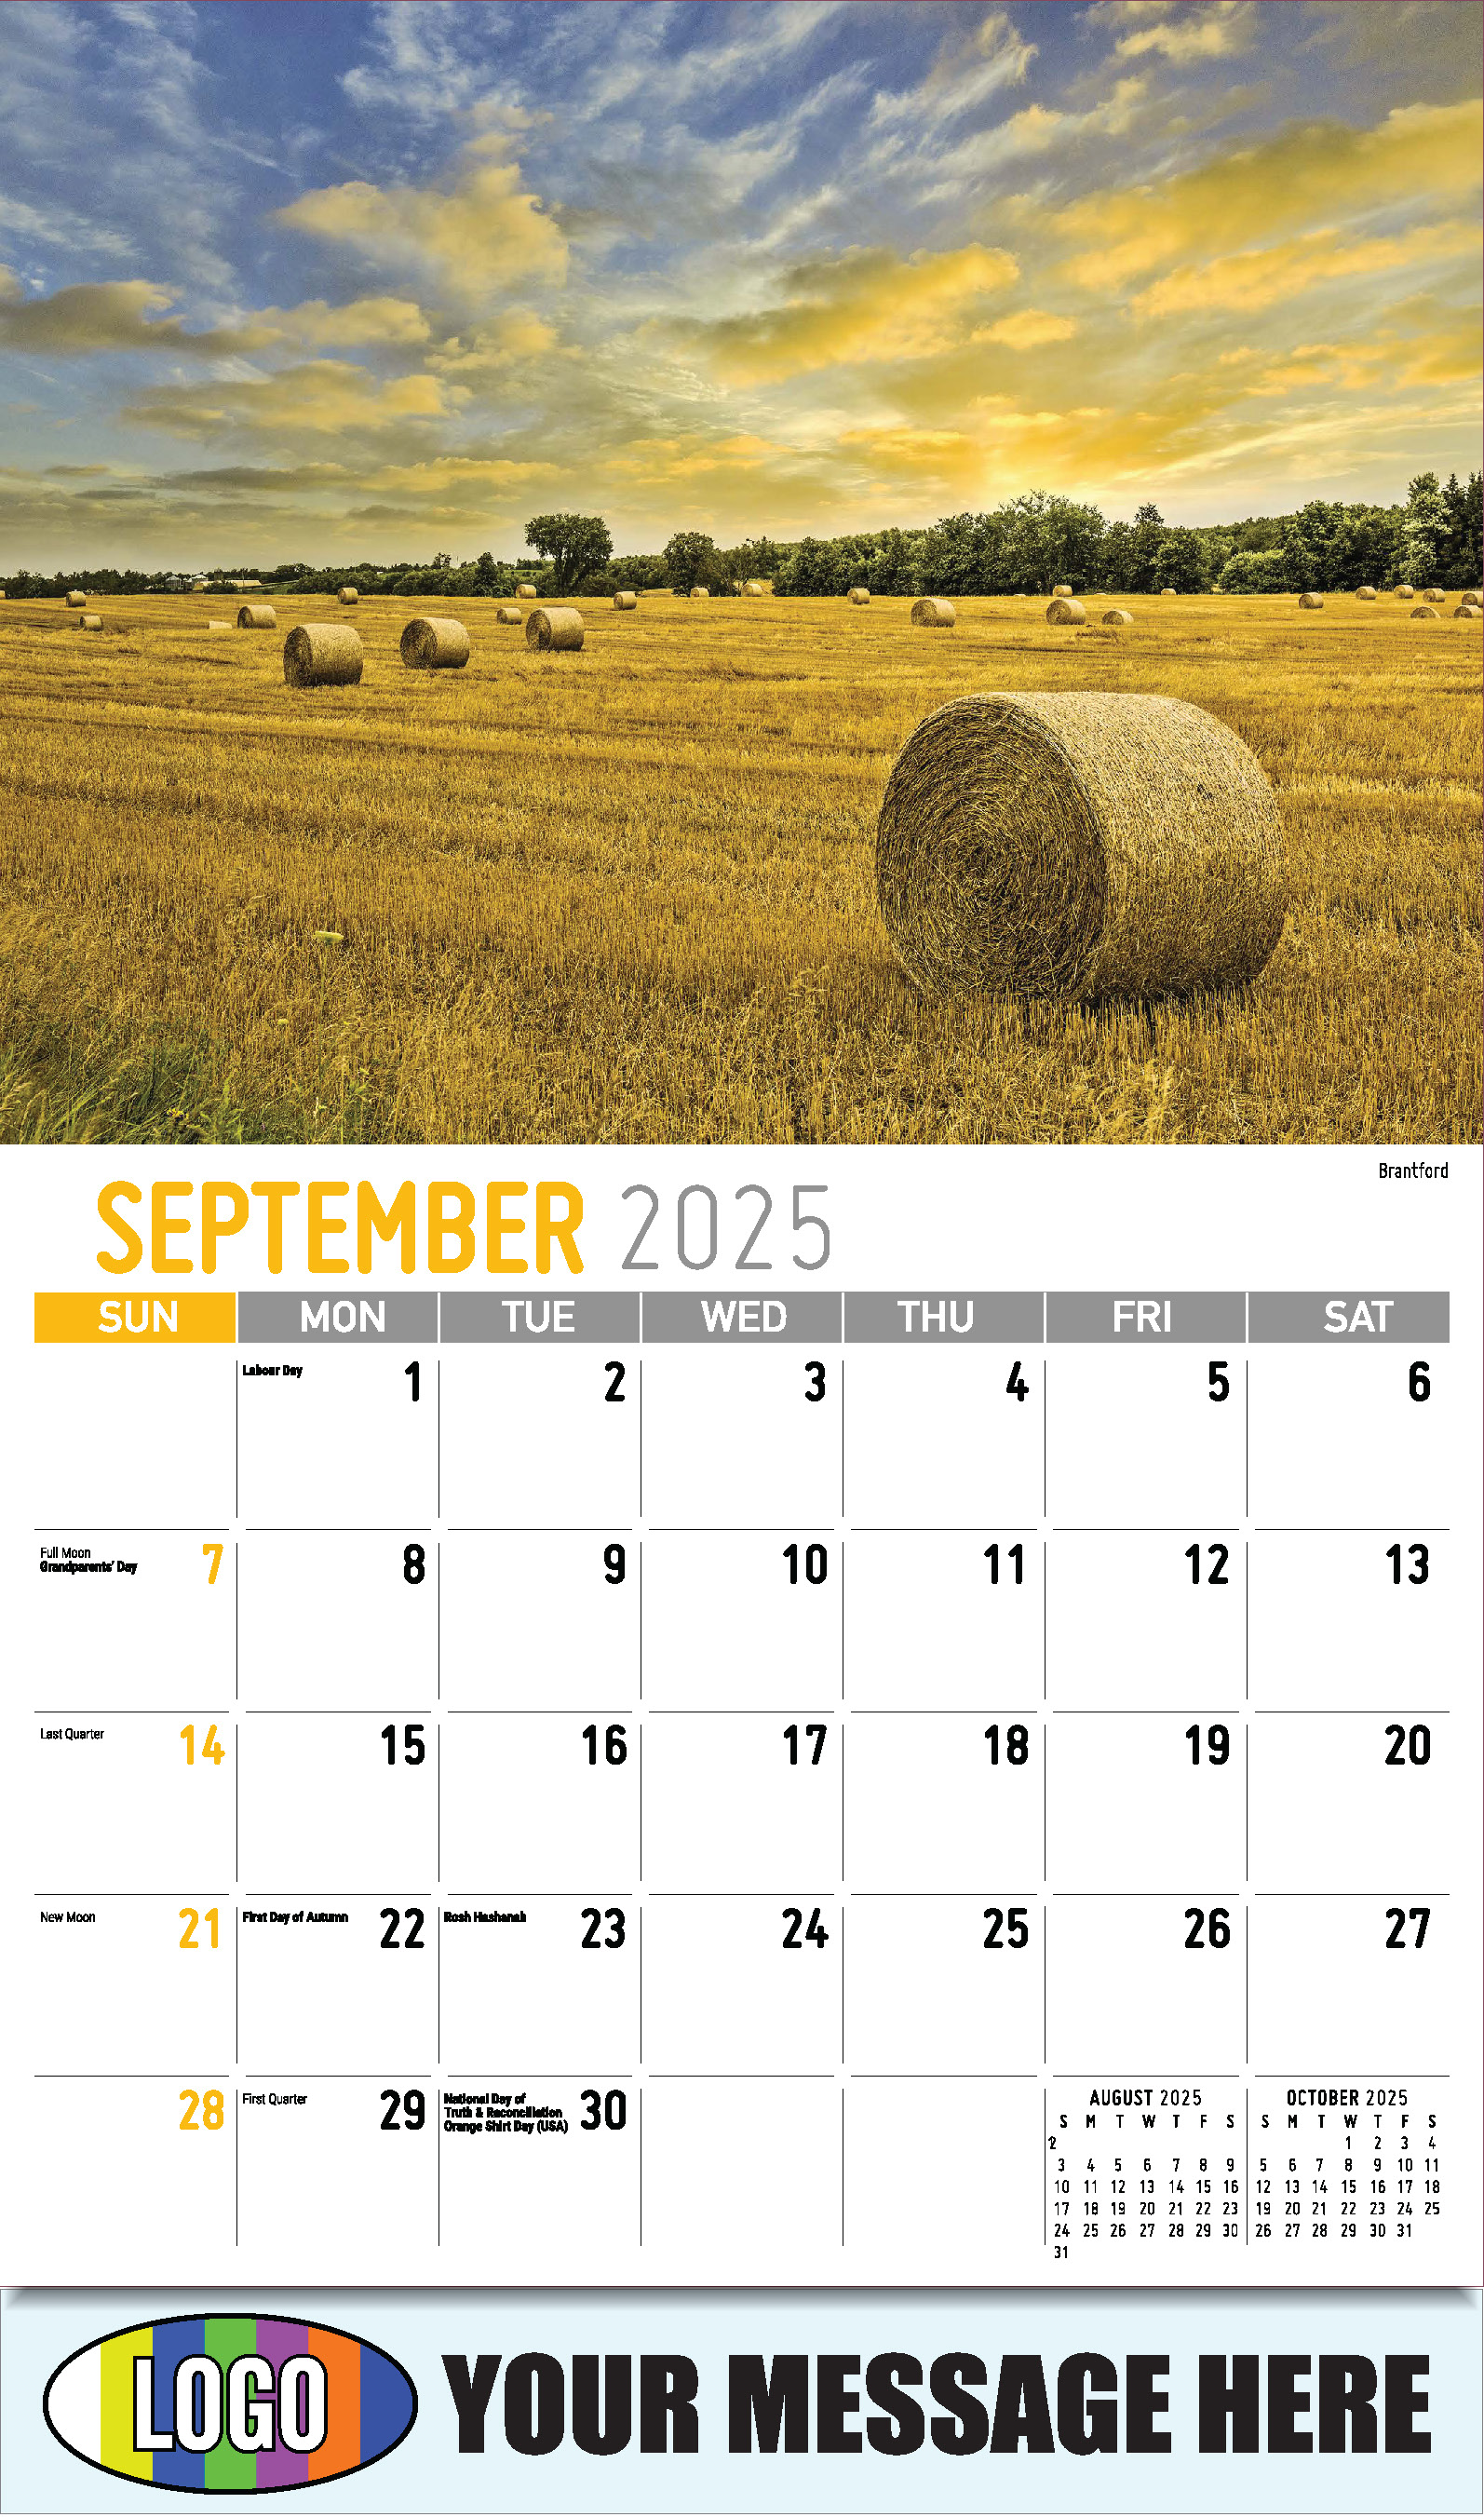 Scenes of Ontario 2025 Business Promo Wall Calendar - September